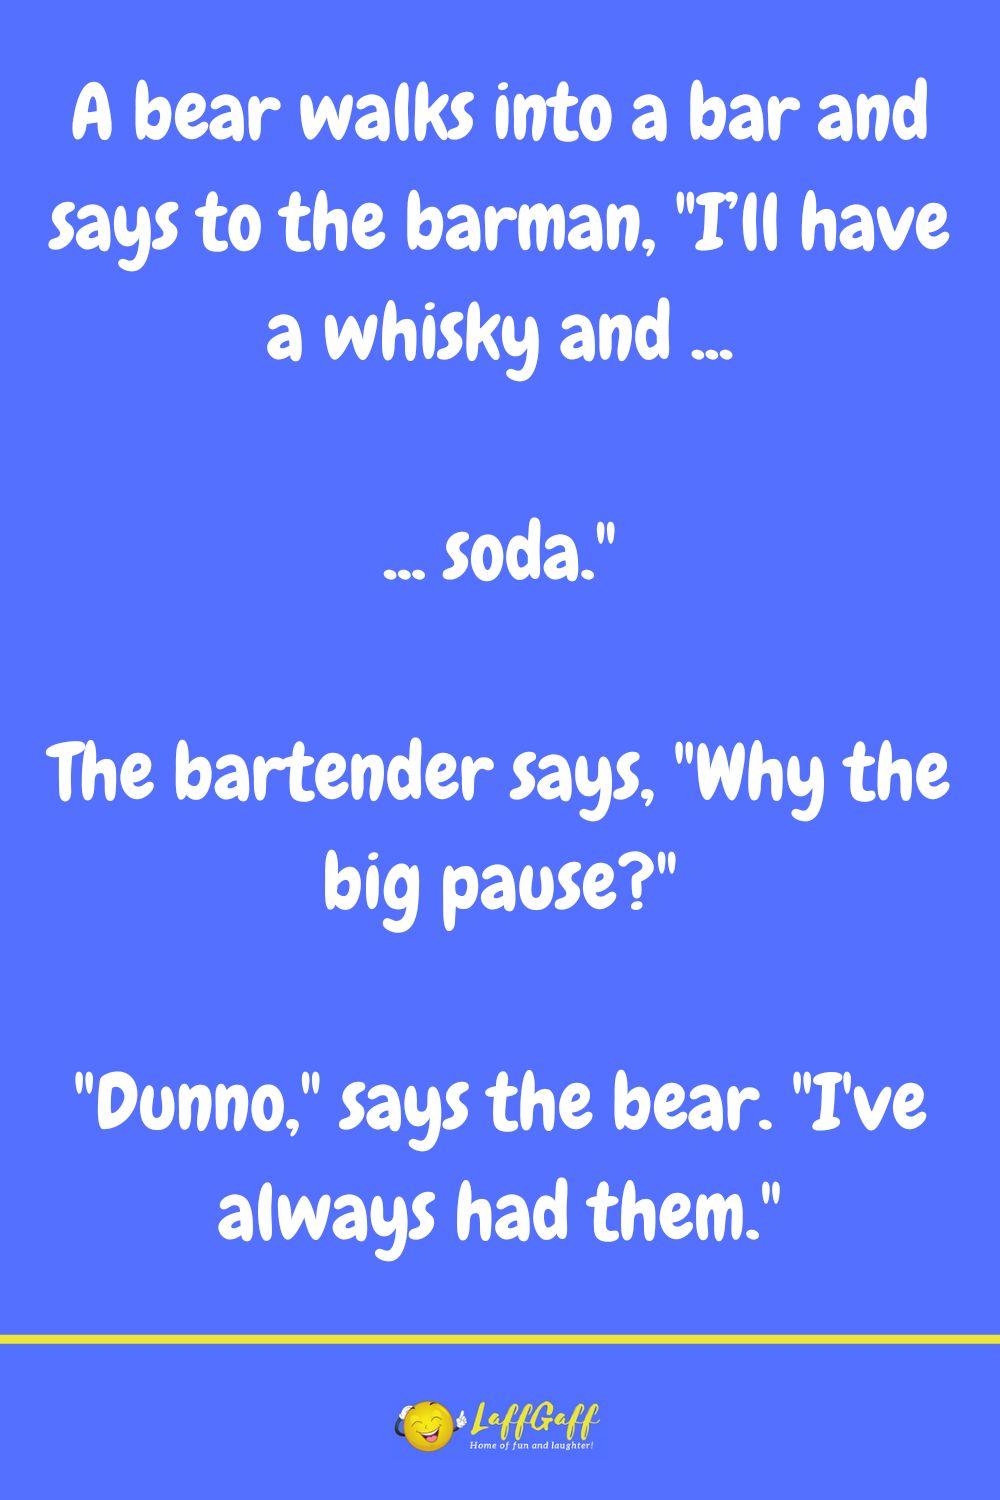 A bear walks into a bar joke from LaffGaff.